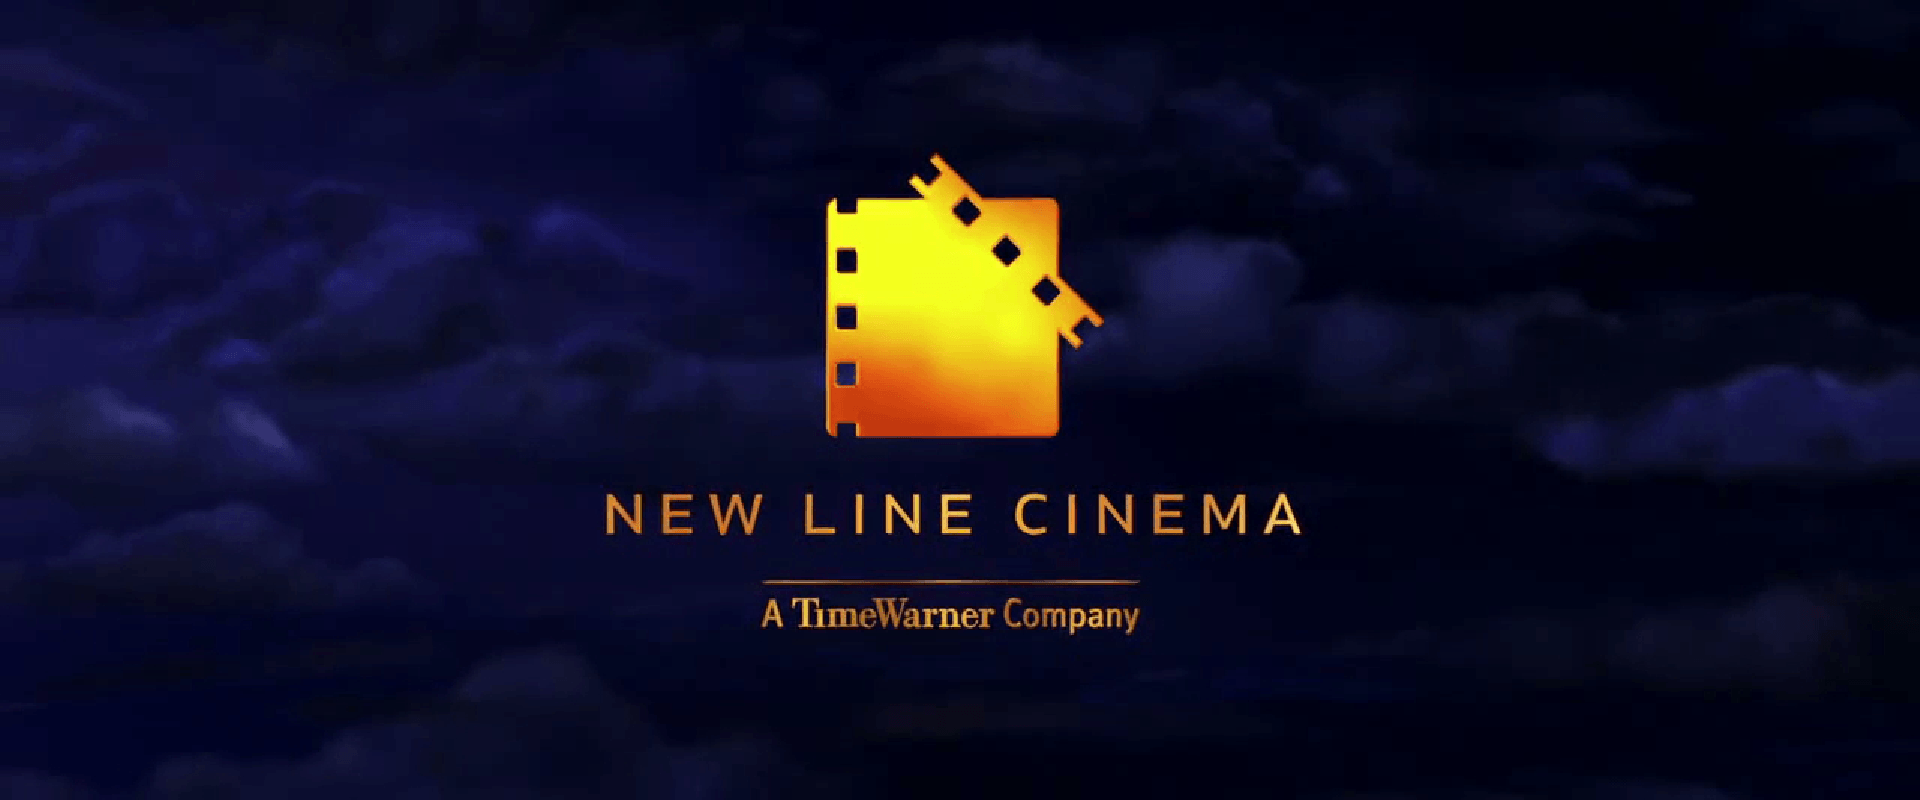 New Line Cinema Logo - Image - New Line Cinema logo.png | The Idea Wiki | FANDOM powered by ...